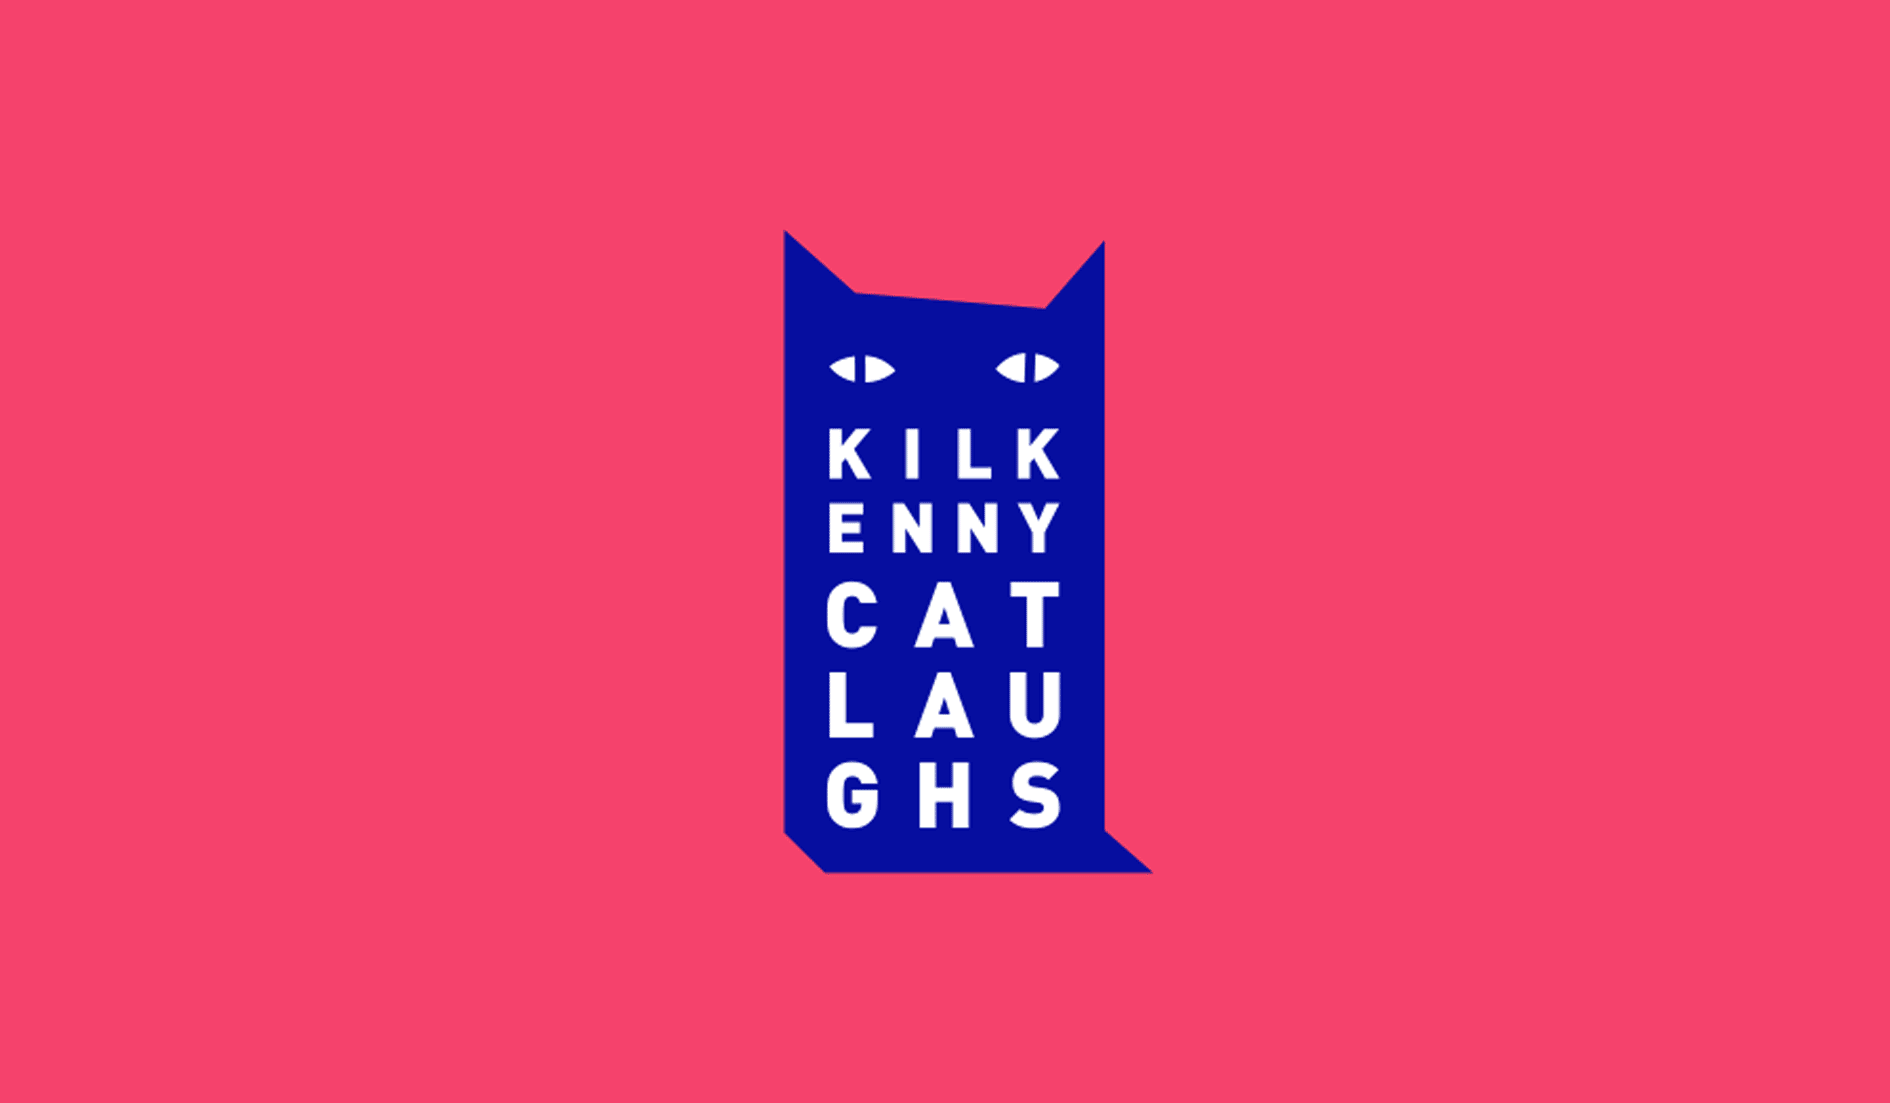 Kilkenny Cat Laughs